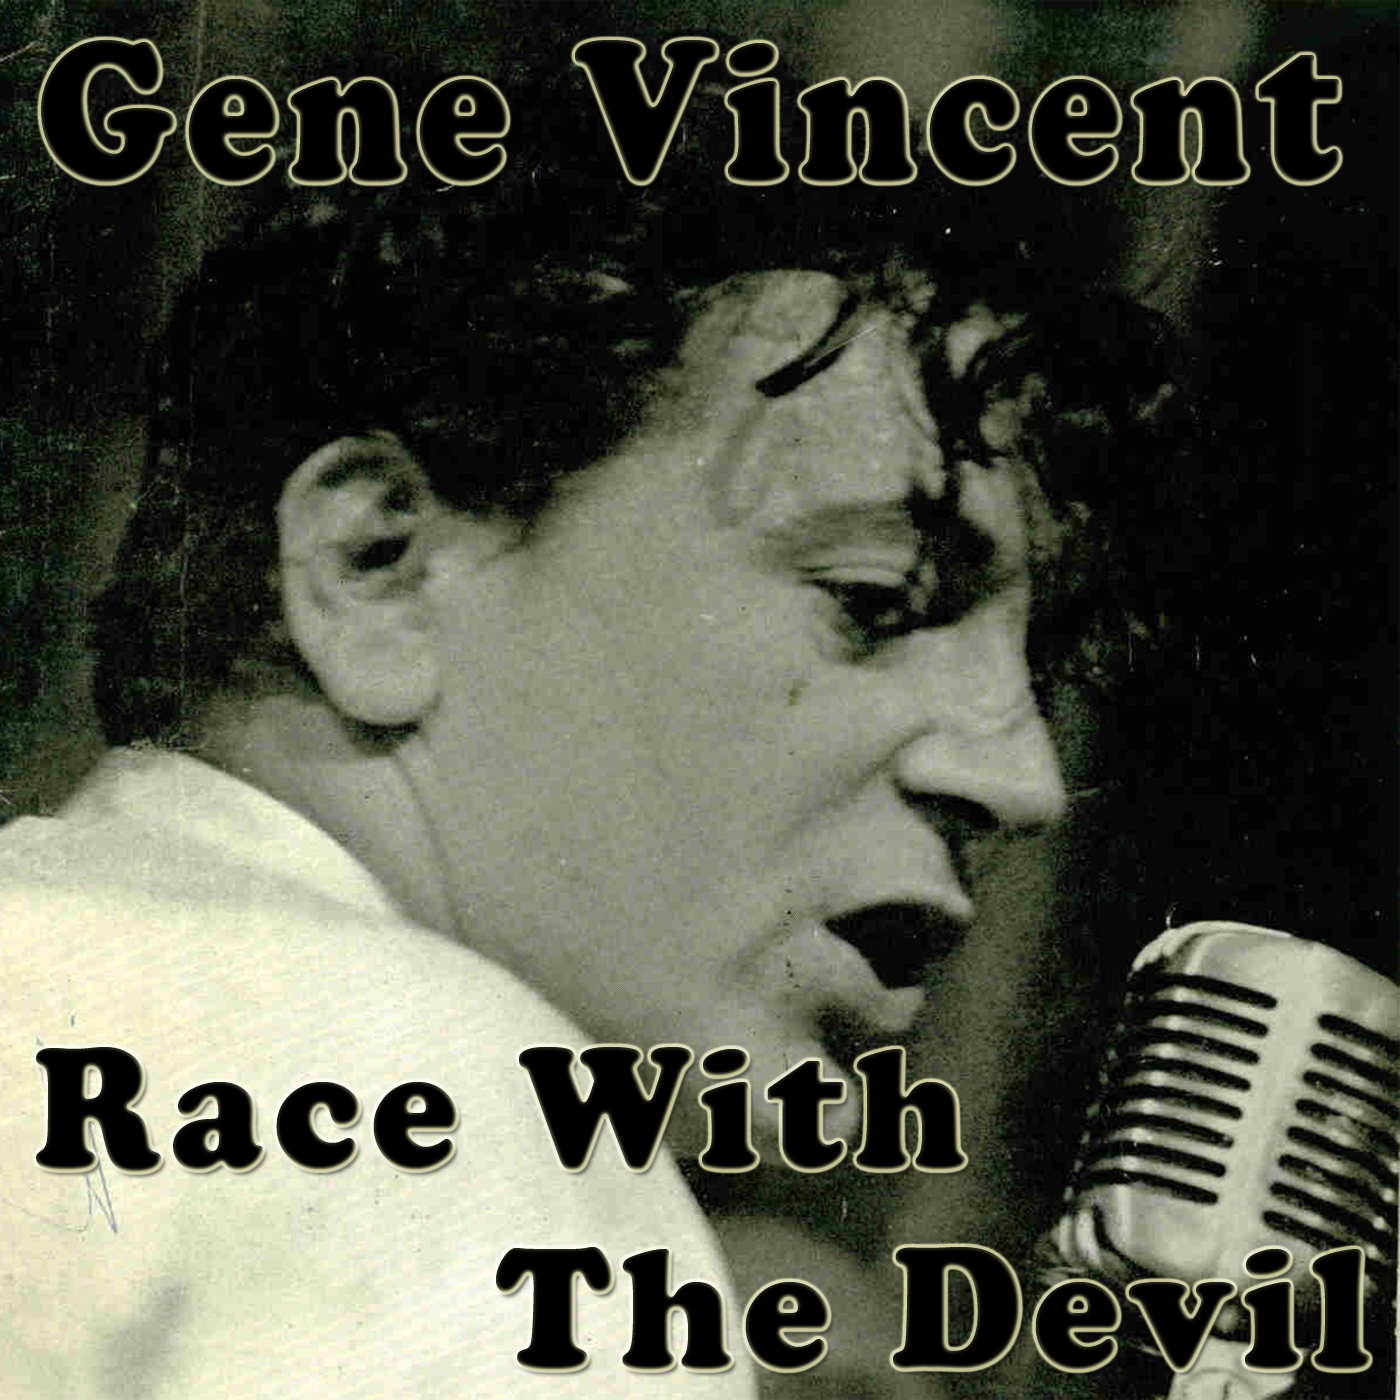 Gene Vincent - Race With The Devil